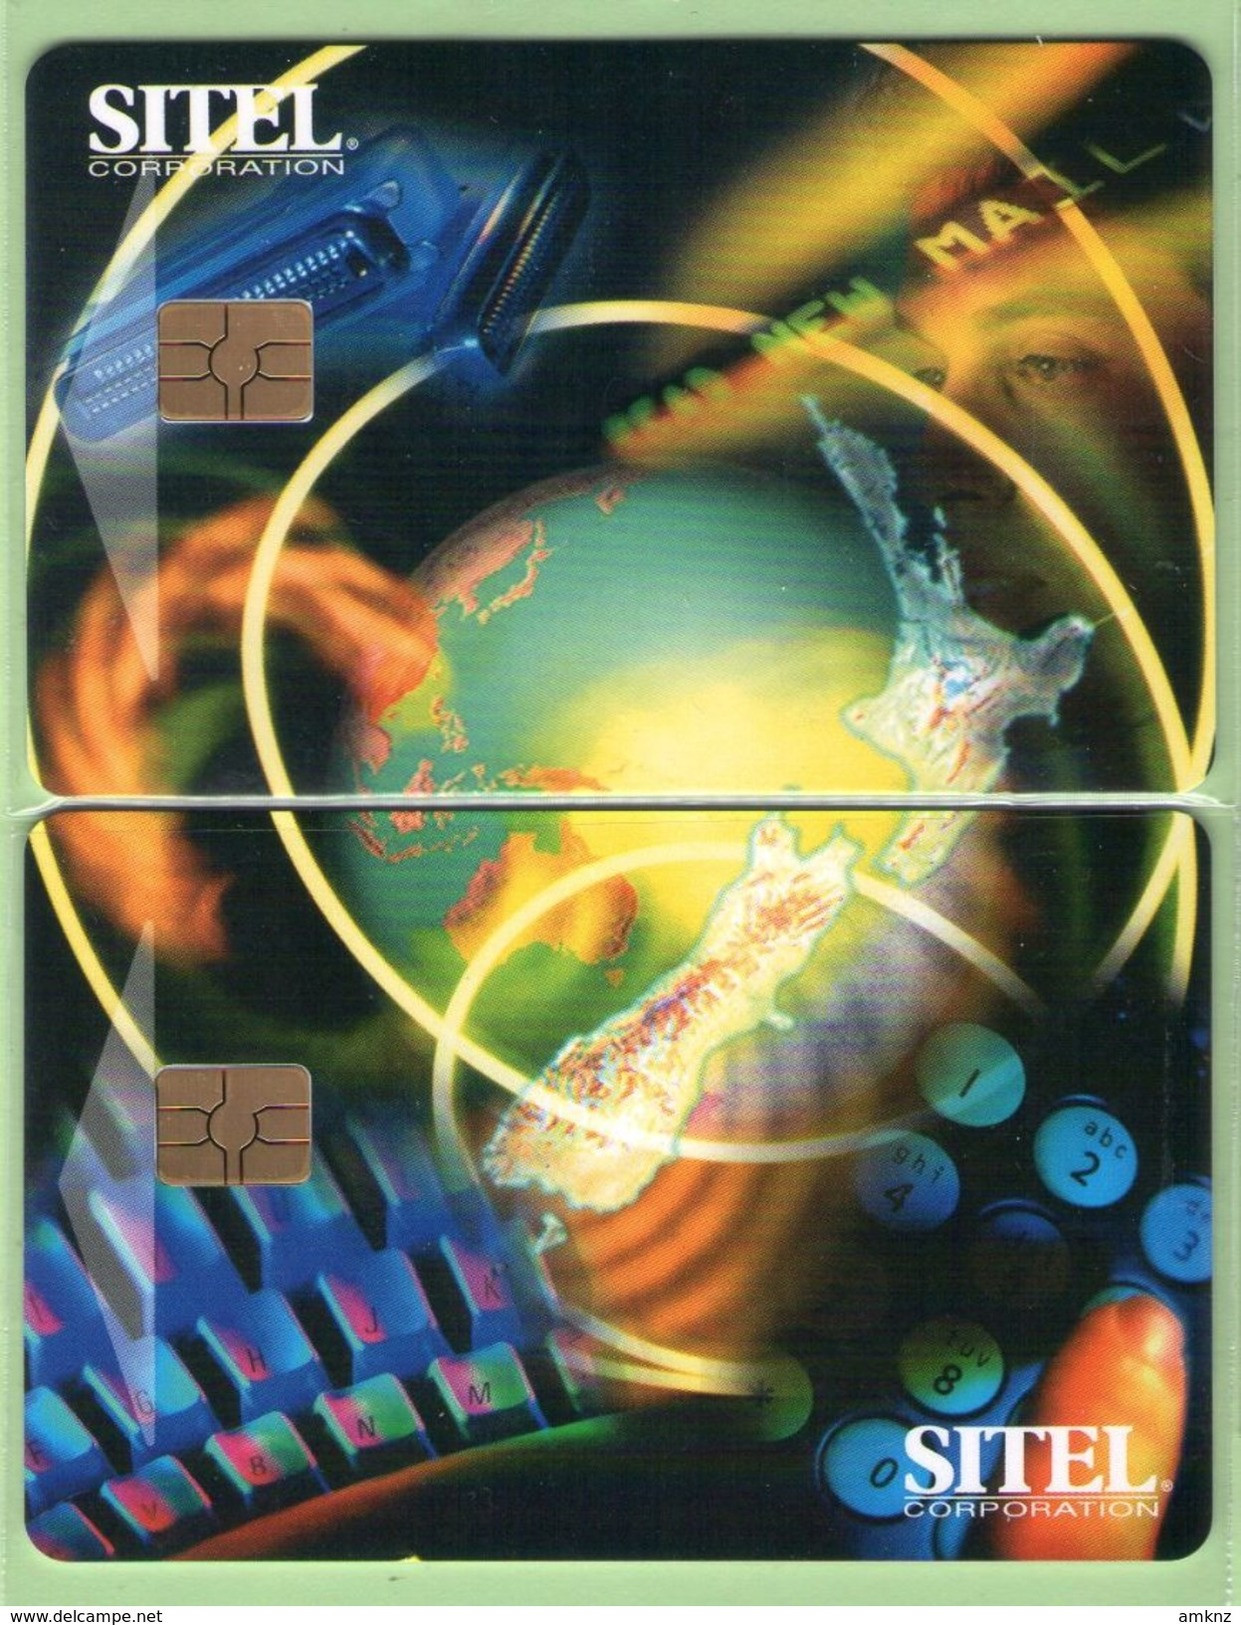 New Zealand - Chipcards - 1999 SITEL Corporation - Puzzle Set (2) - Mint - Cards 017 - Neuseeland